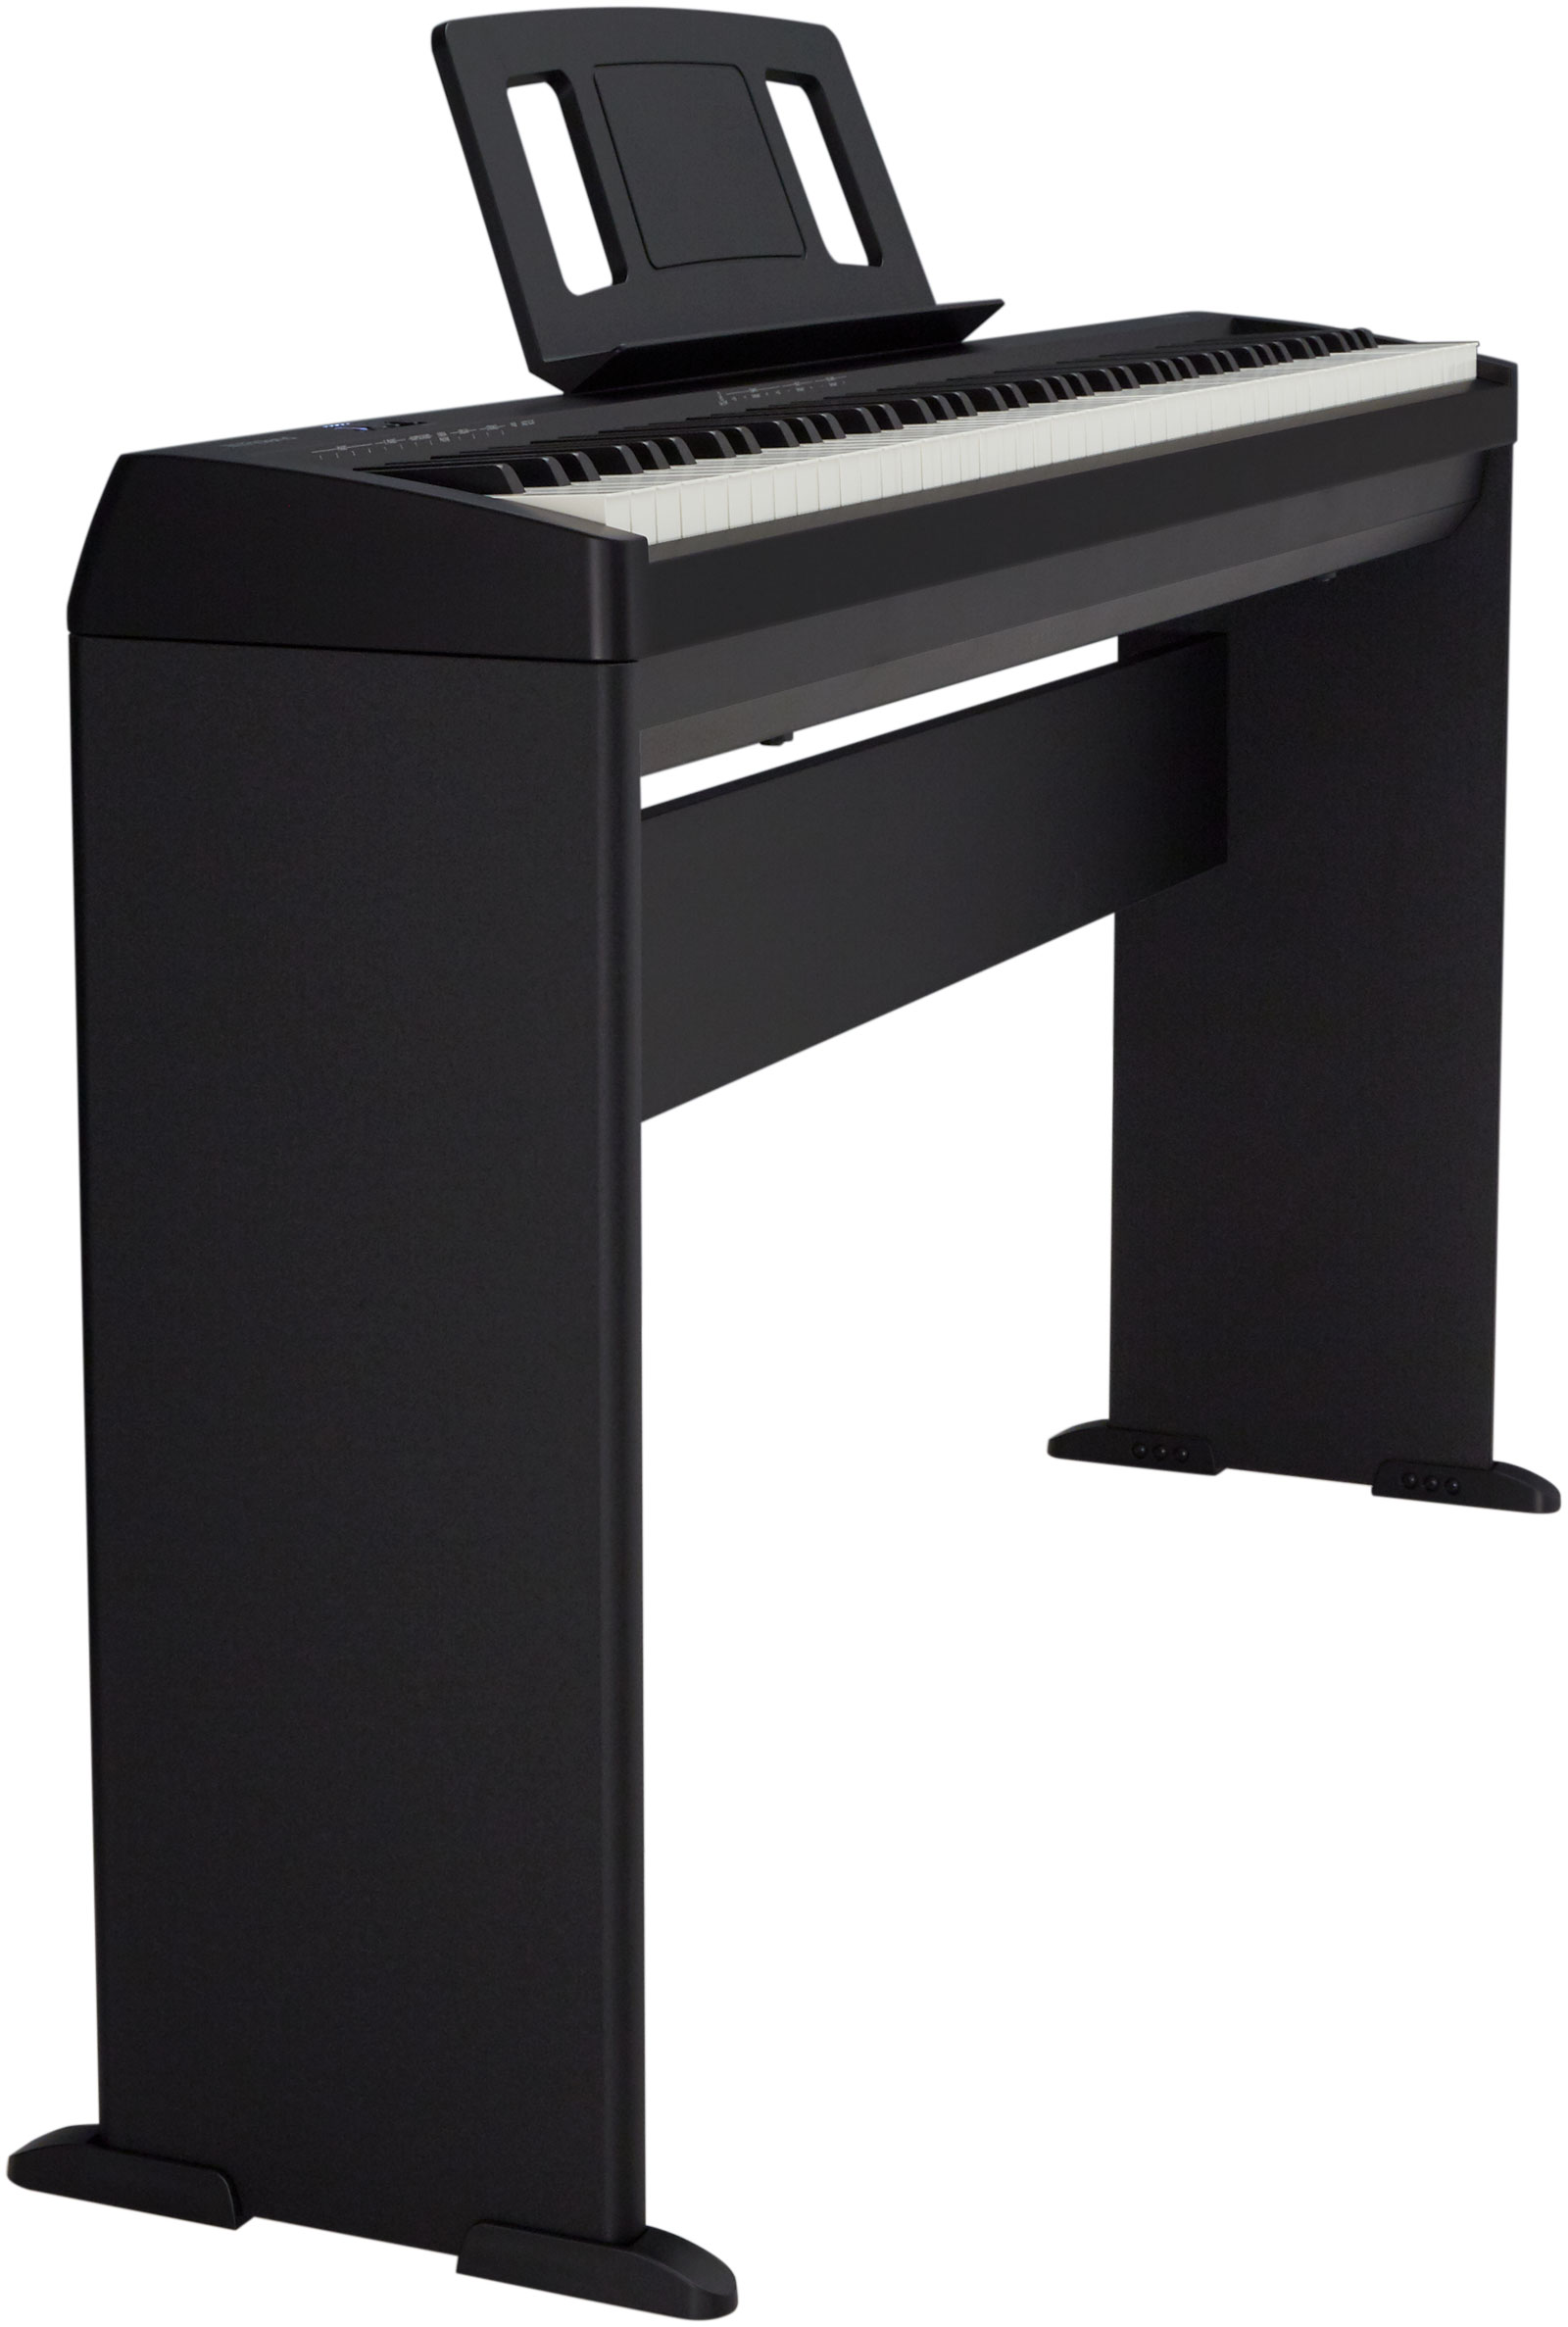 Roland Fp-10 Bk - Piano digital portatil - Variation 10